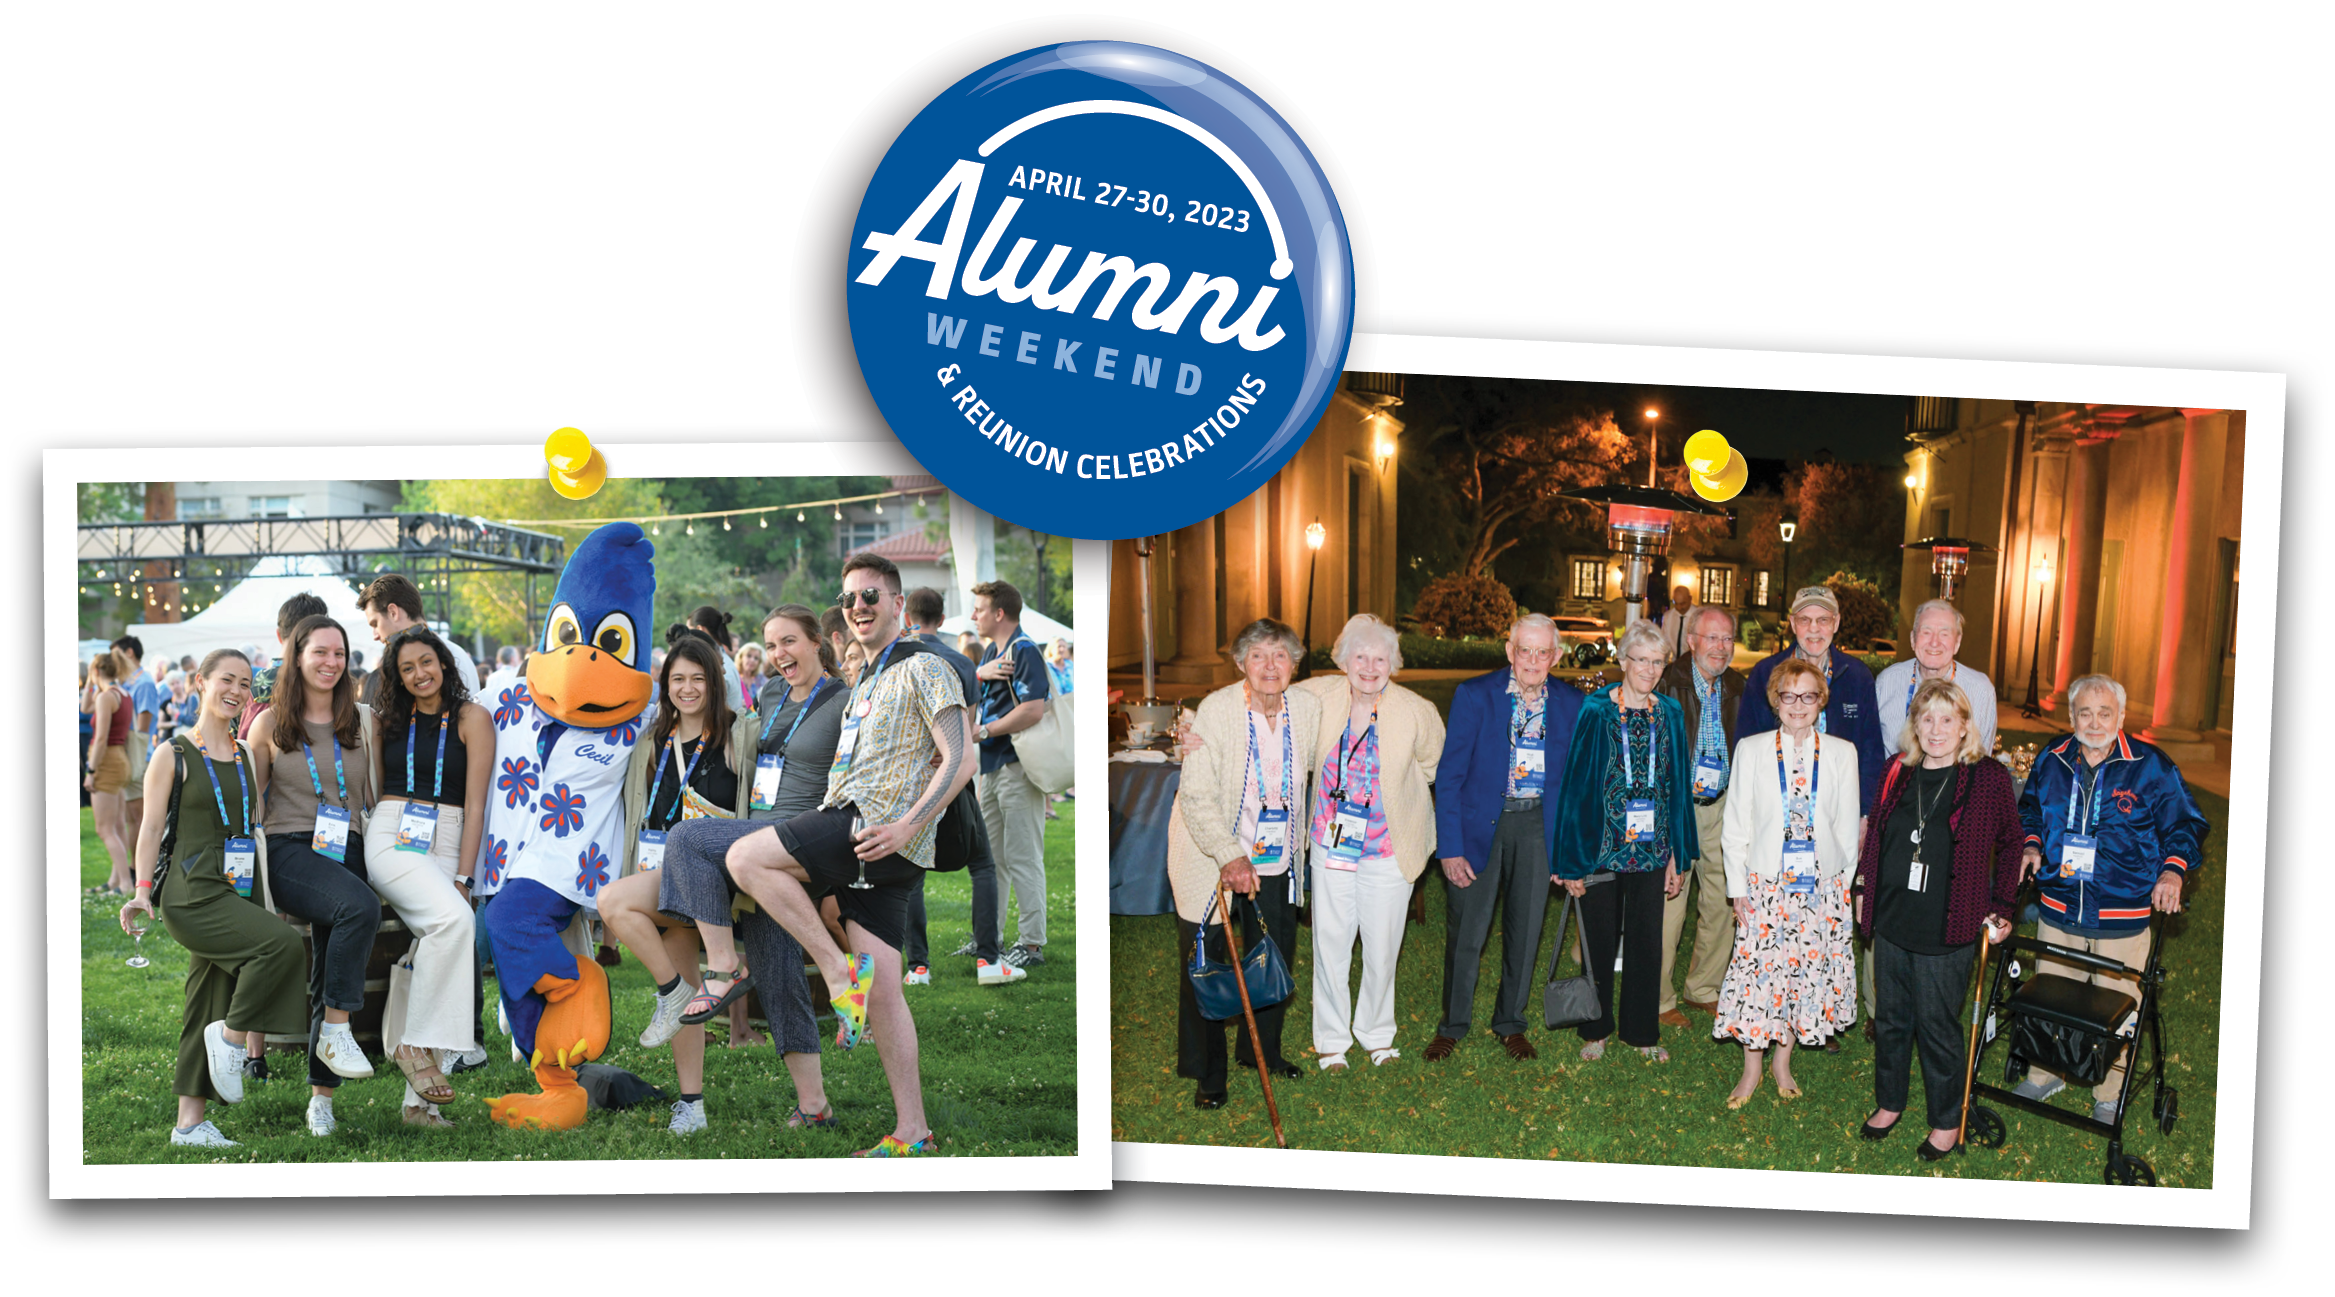 Alumni Weekend and Reunion Celebrations 2023